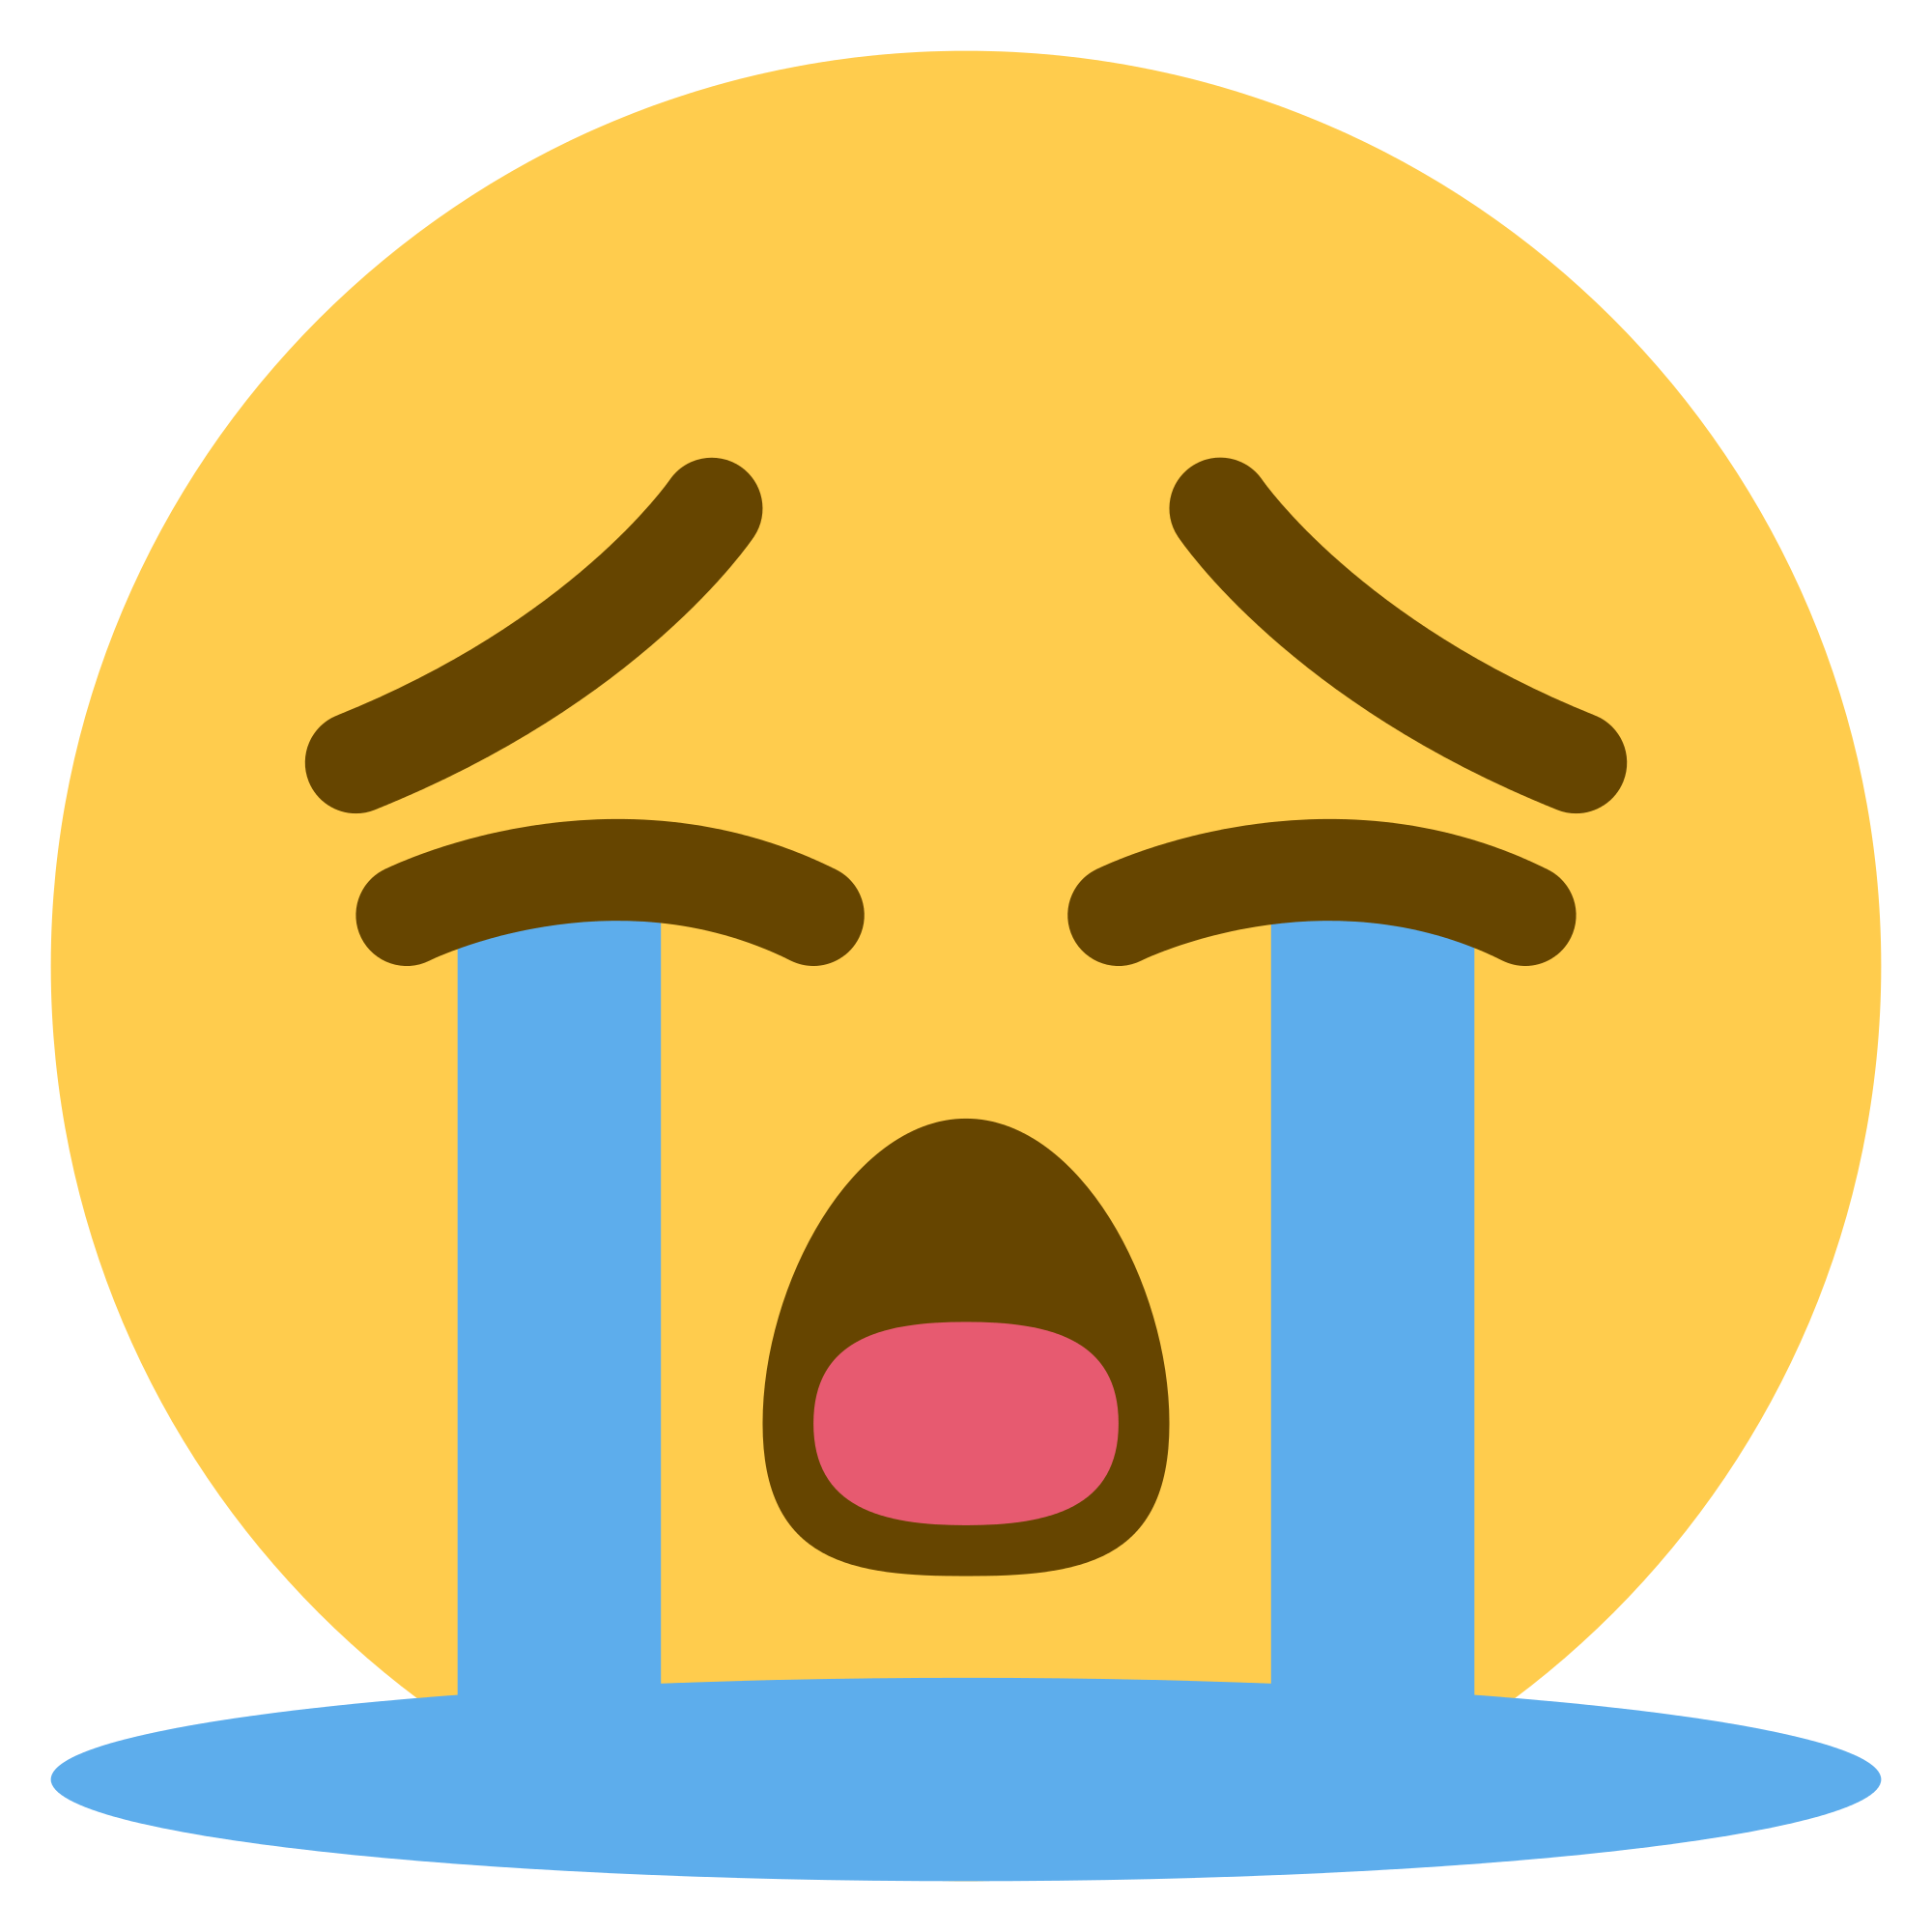 Crying Emoji PNG HD Image